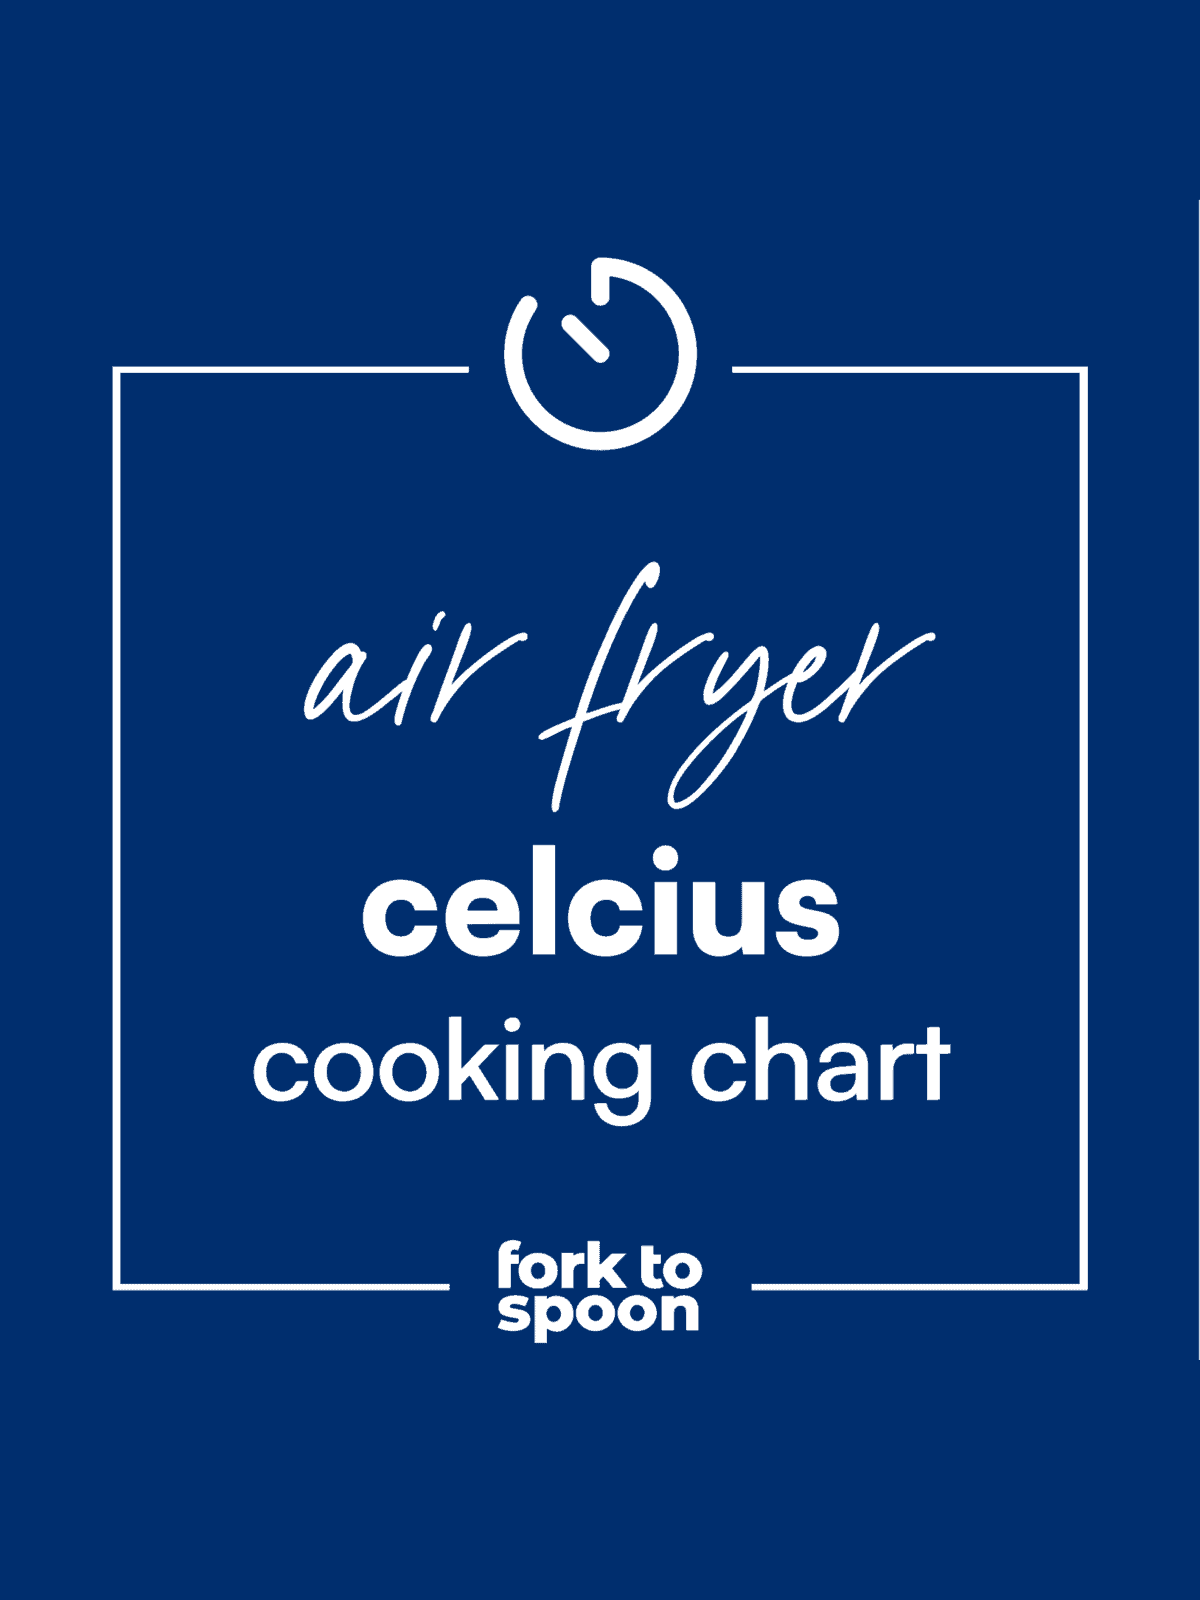 Air Fryer Cooking Chart (Printable Cheat sheet) - Air Fryer Yum